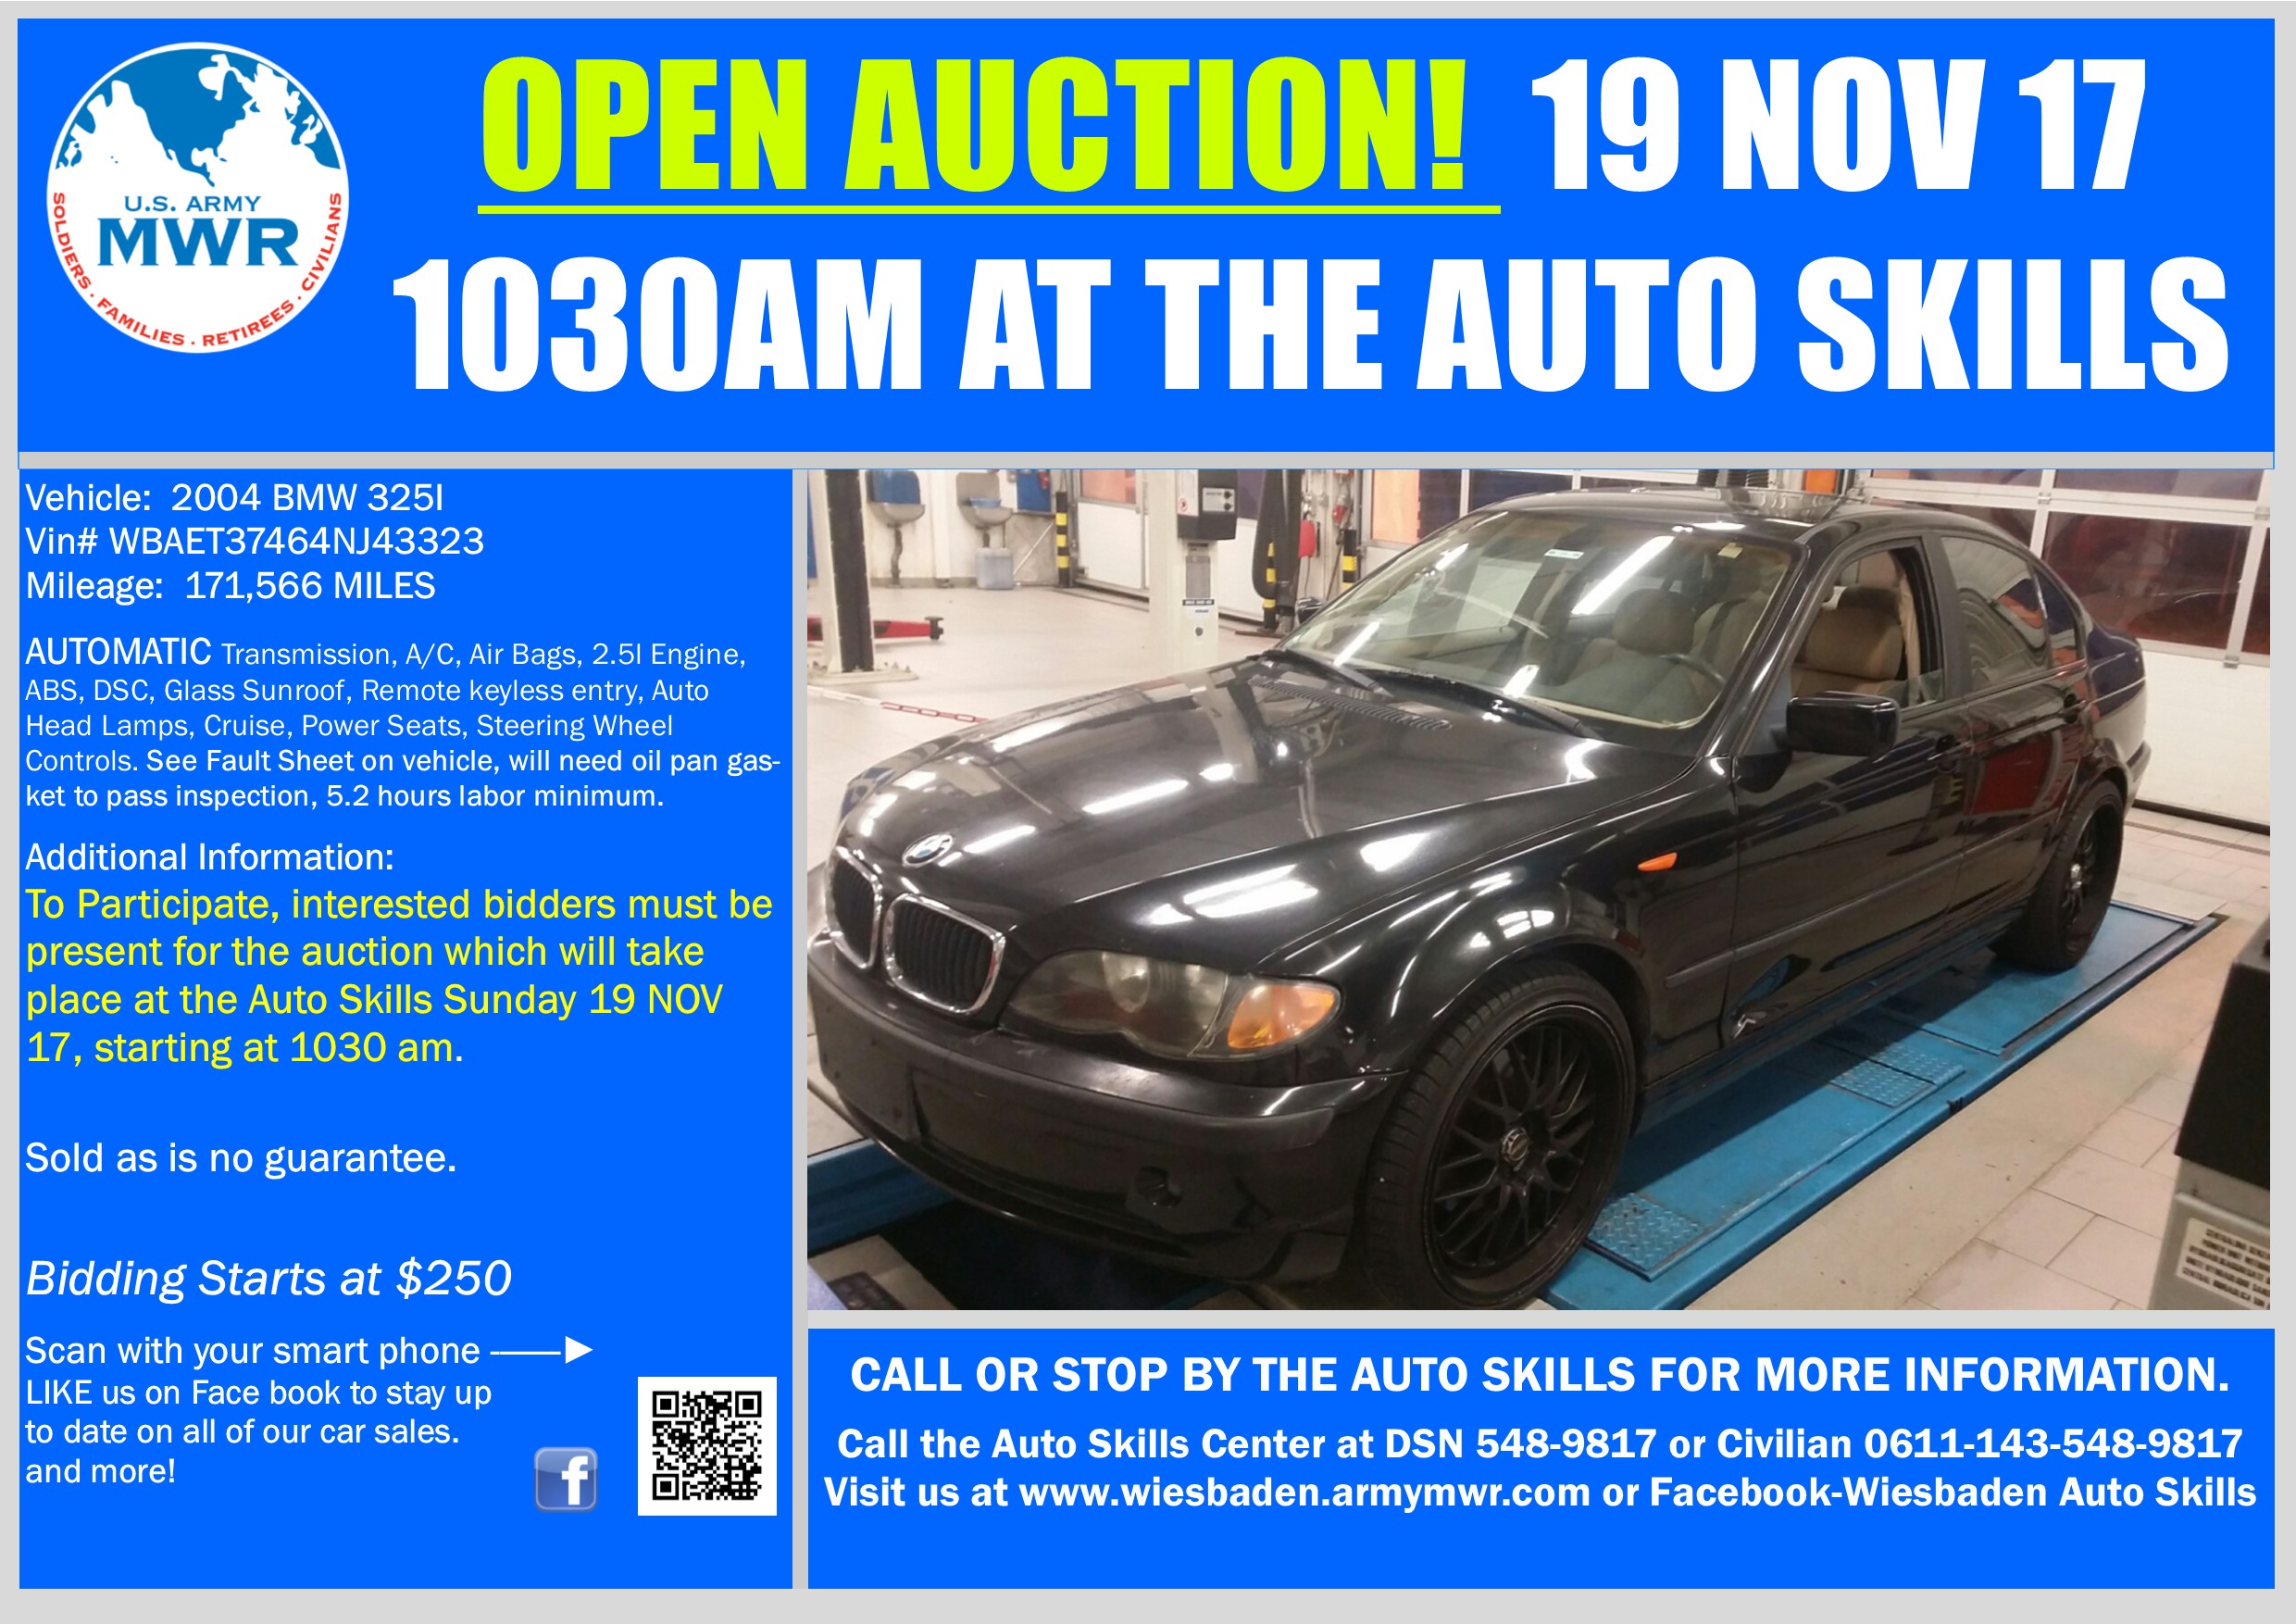 Sale_BMW 325 19 Nov 17 Open Auction.jpg